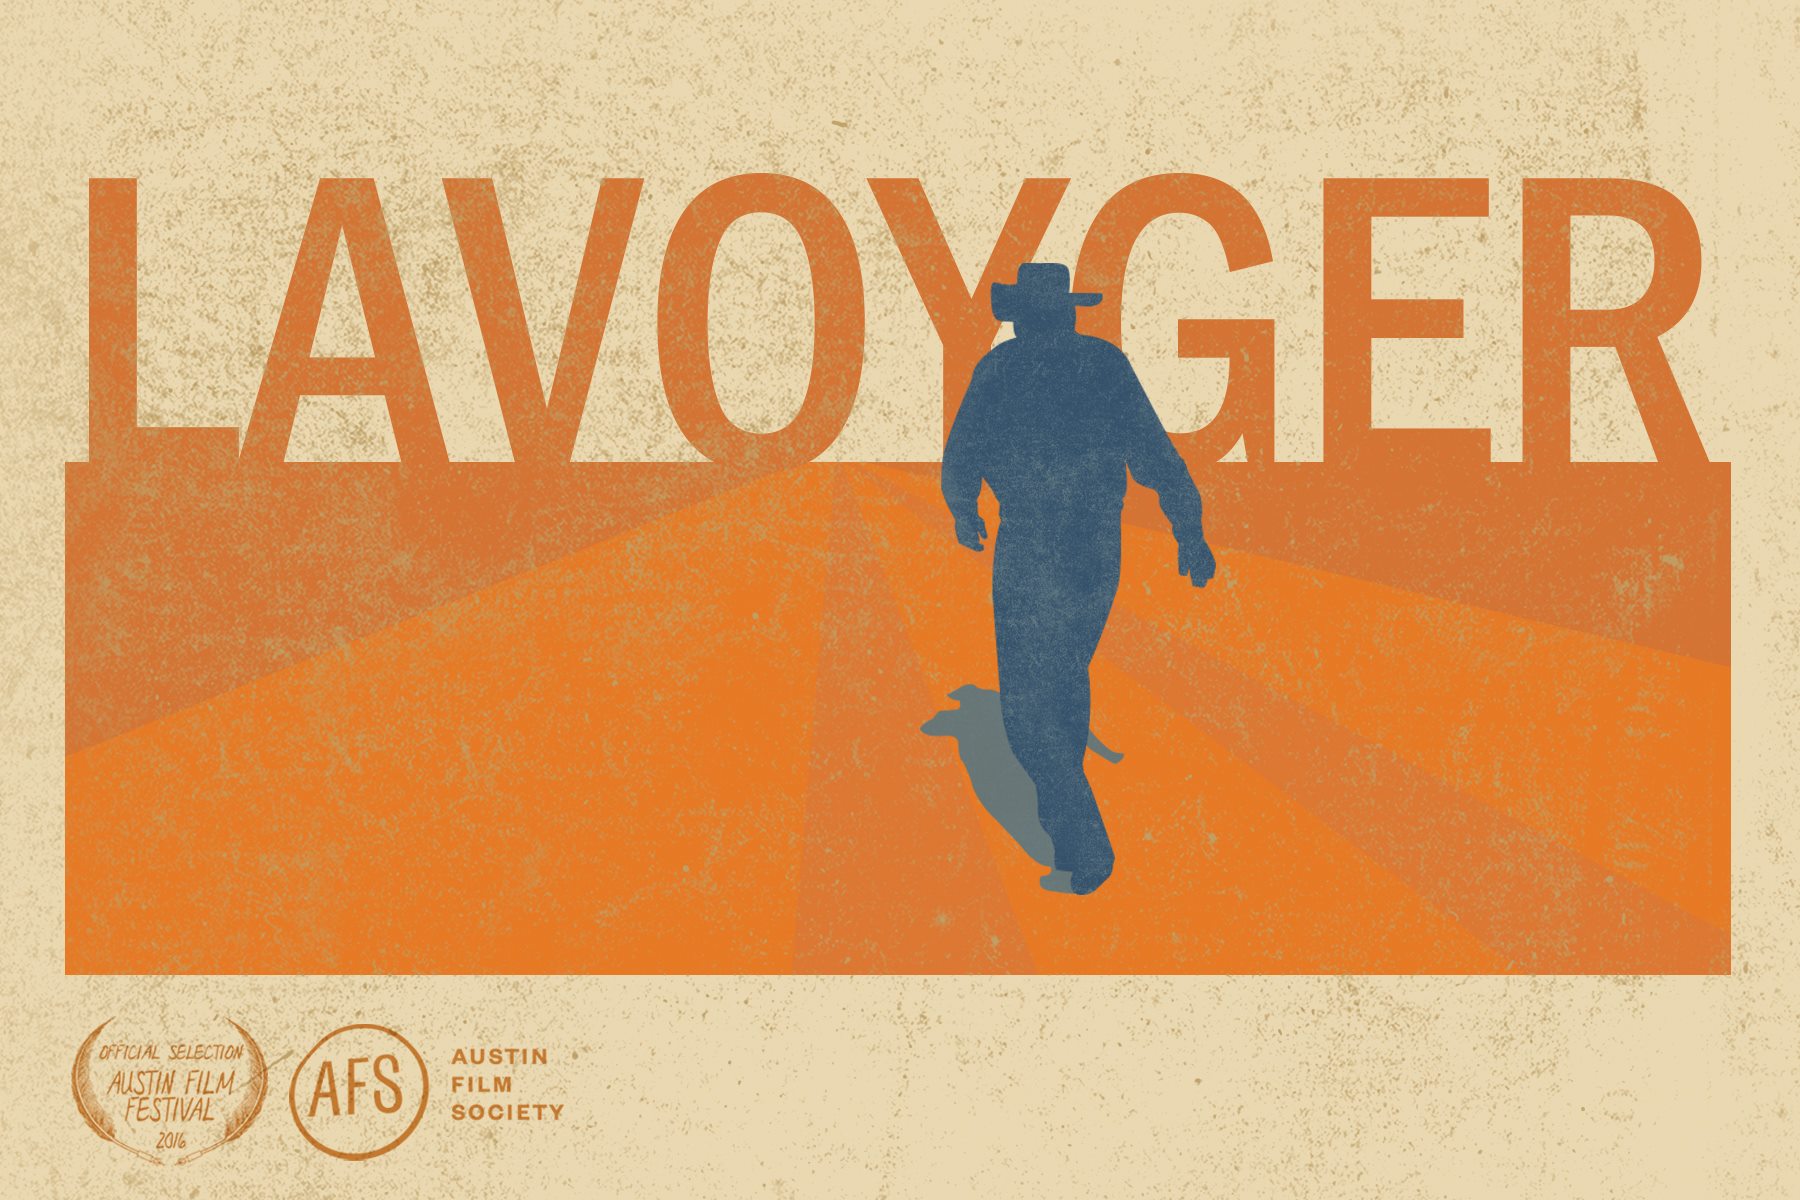 Cowboy Walking Lavoyger Movie Poster